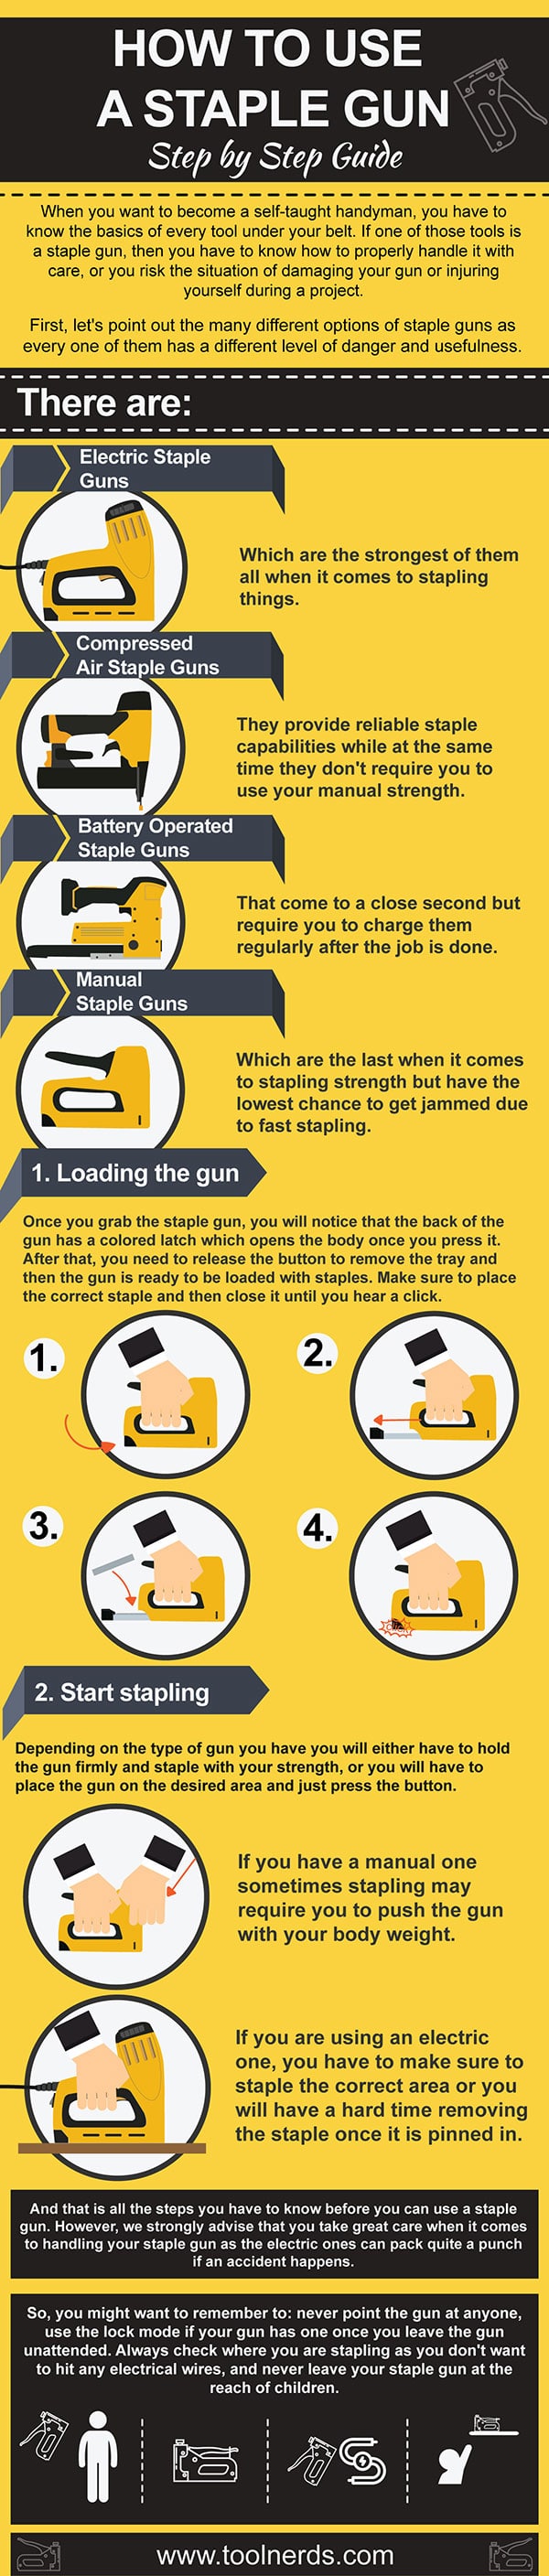 guide to handling a staple gun